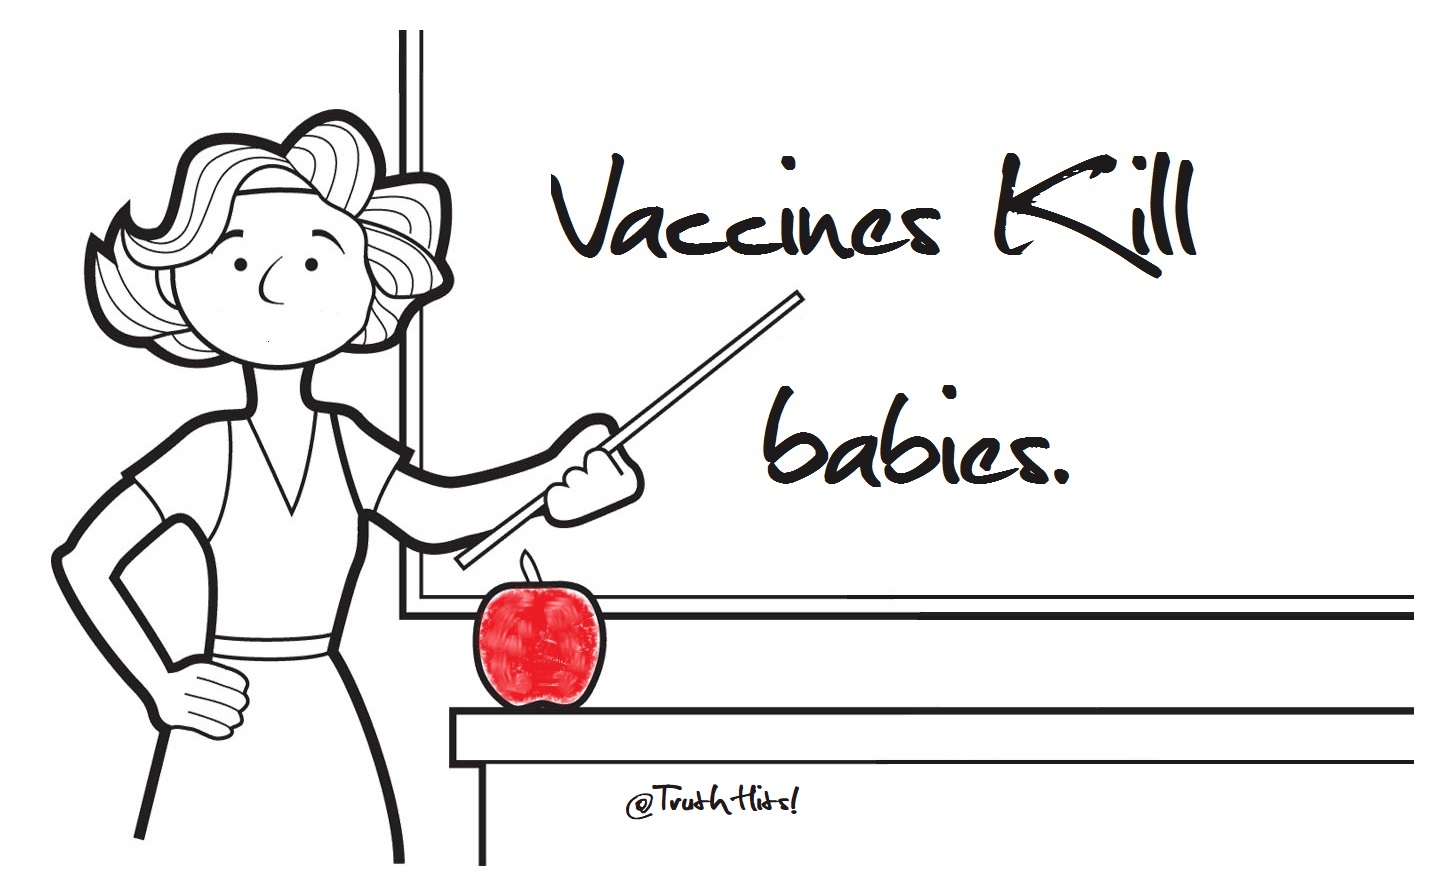 vaccines kill babies